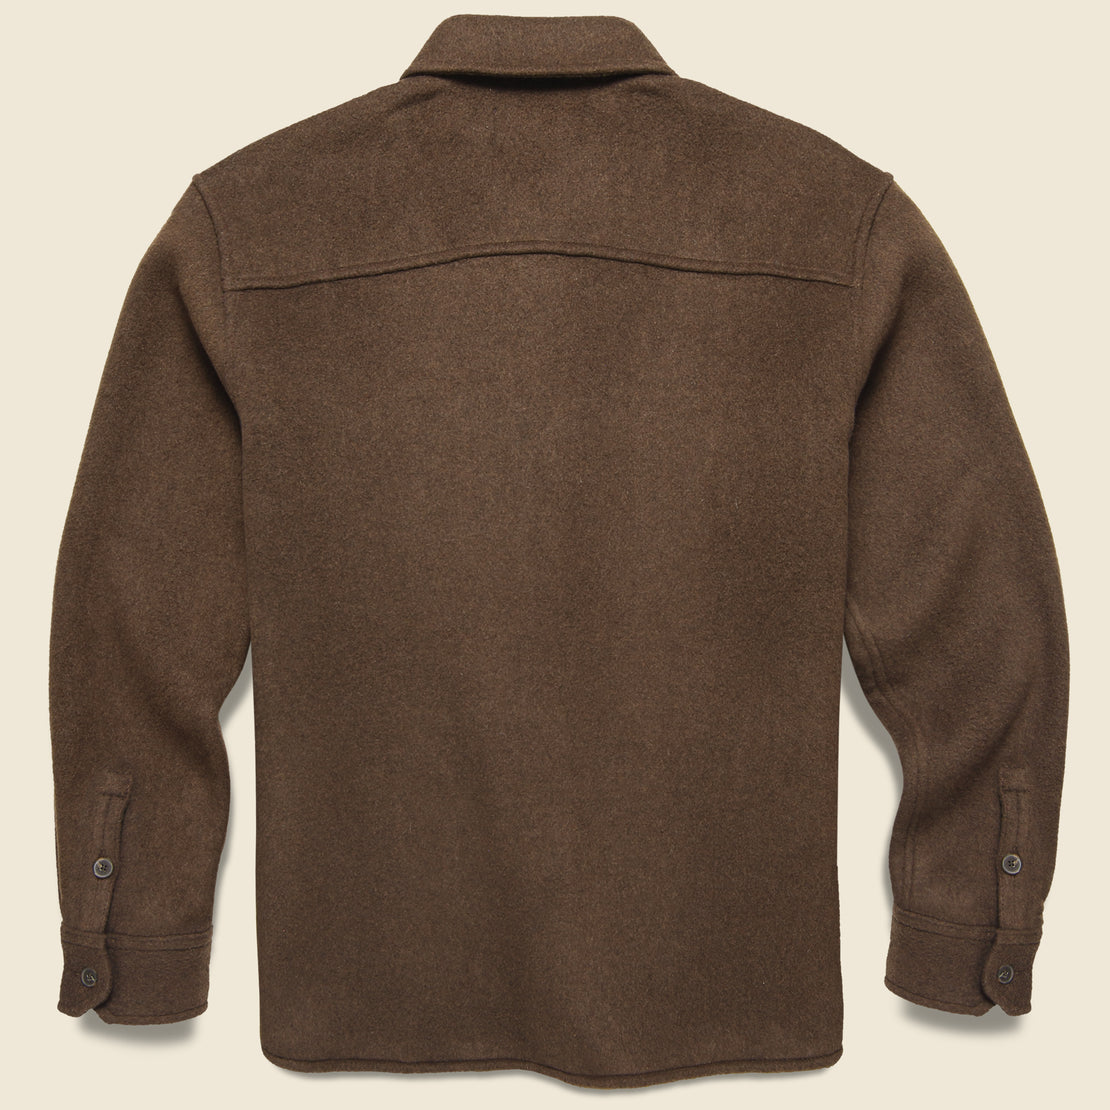 Draper Wool Shirt Jacket - Bark